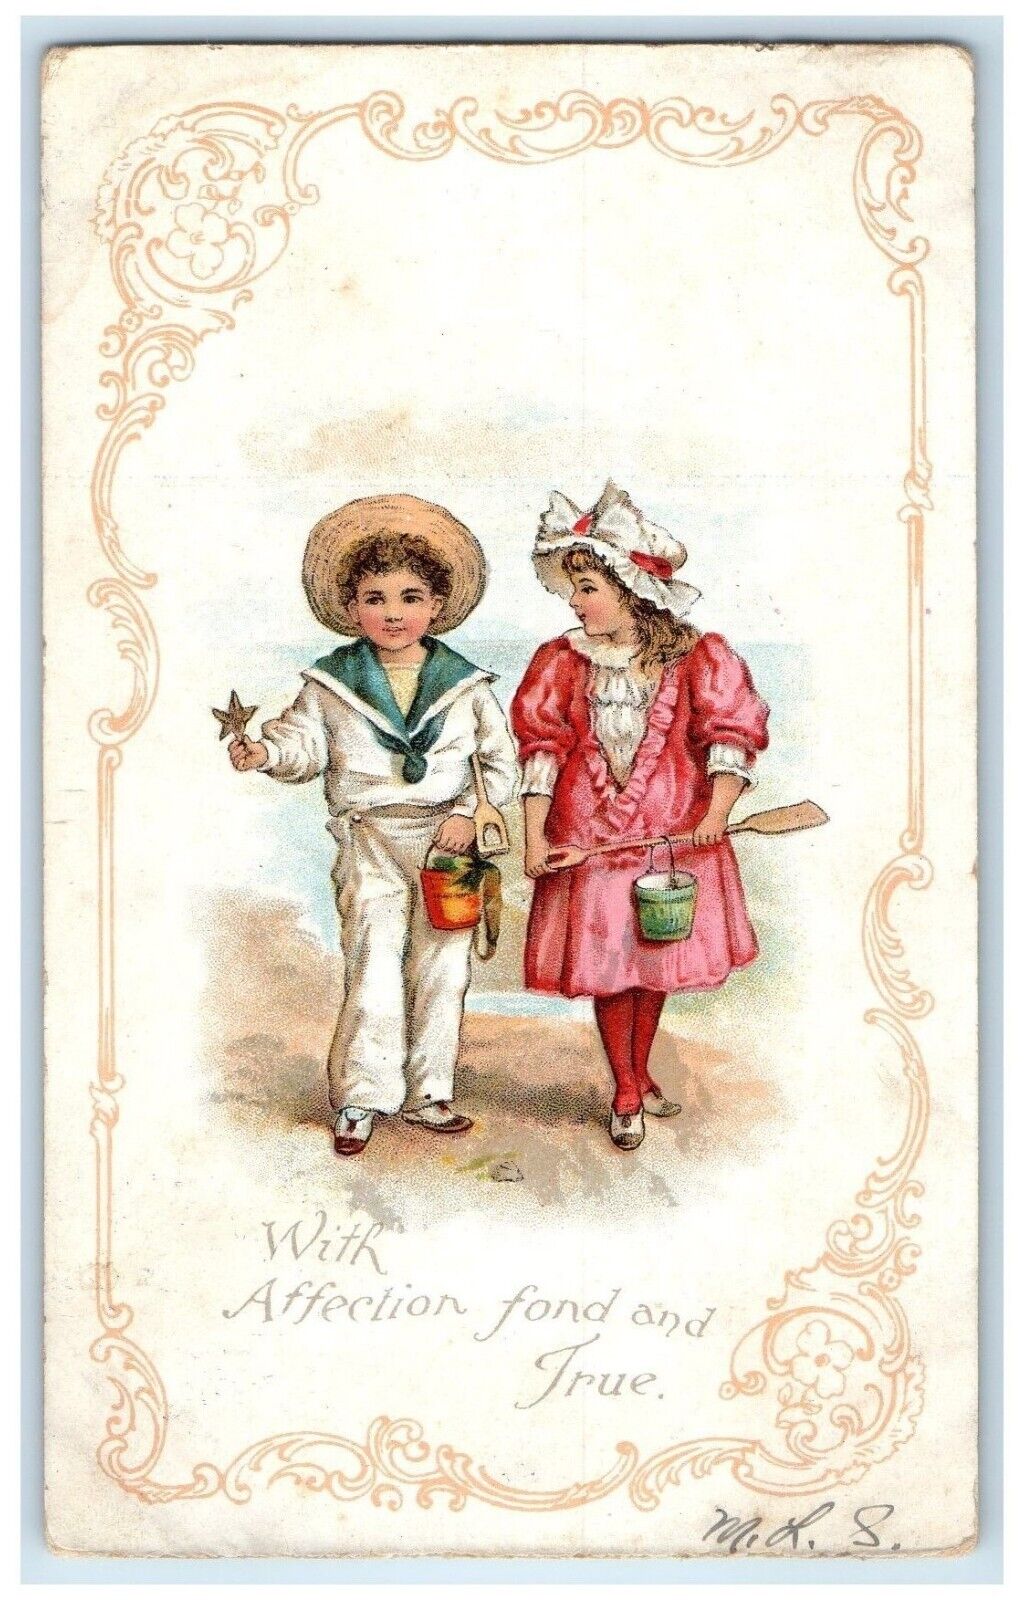 1911 Children Walking Bucket With Affection Fond Elgin Minnesota MN Postcard